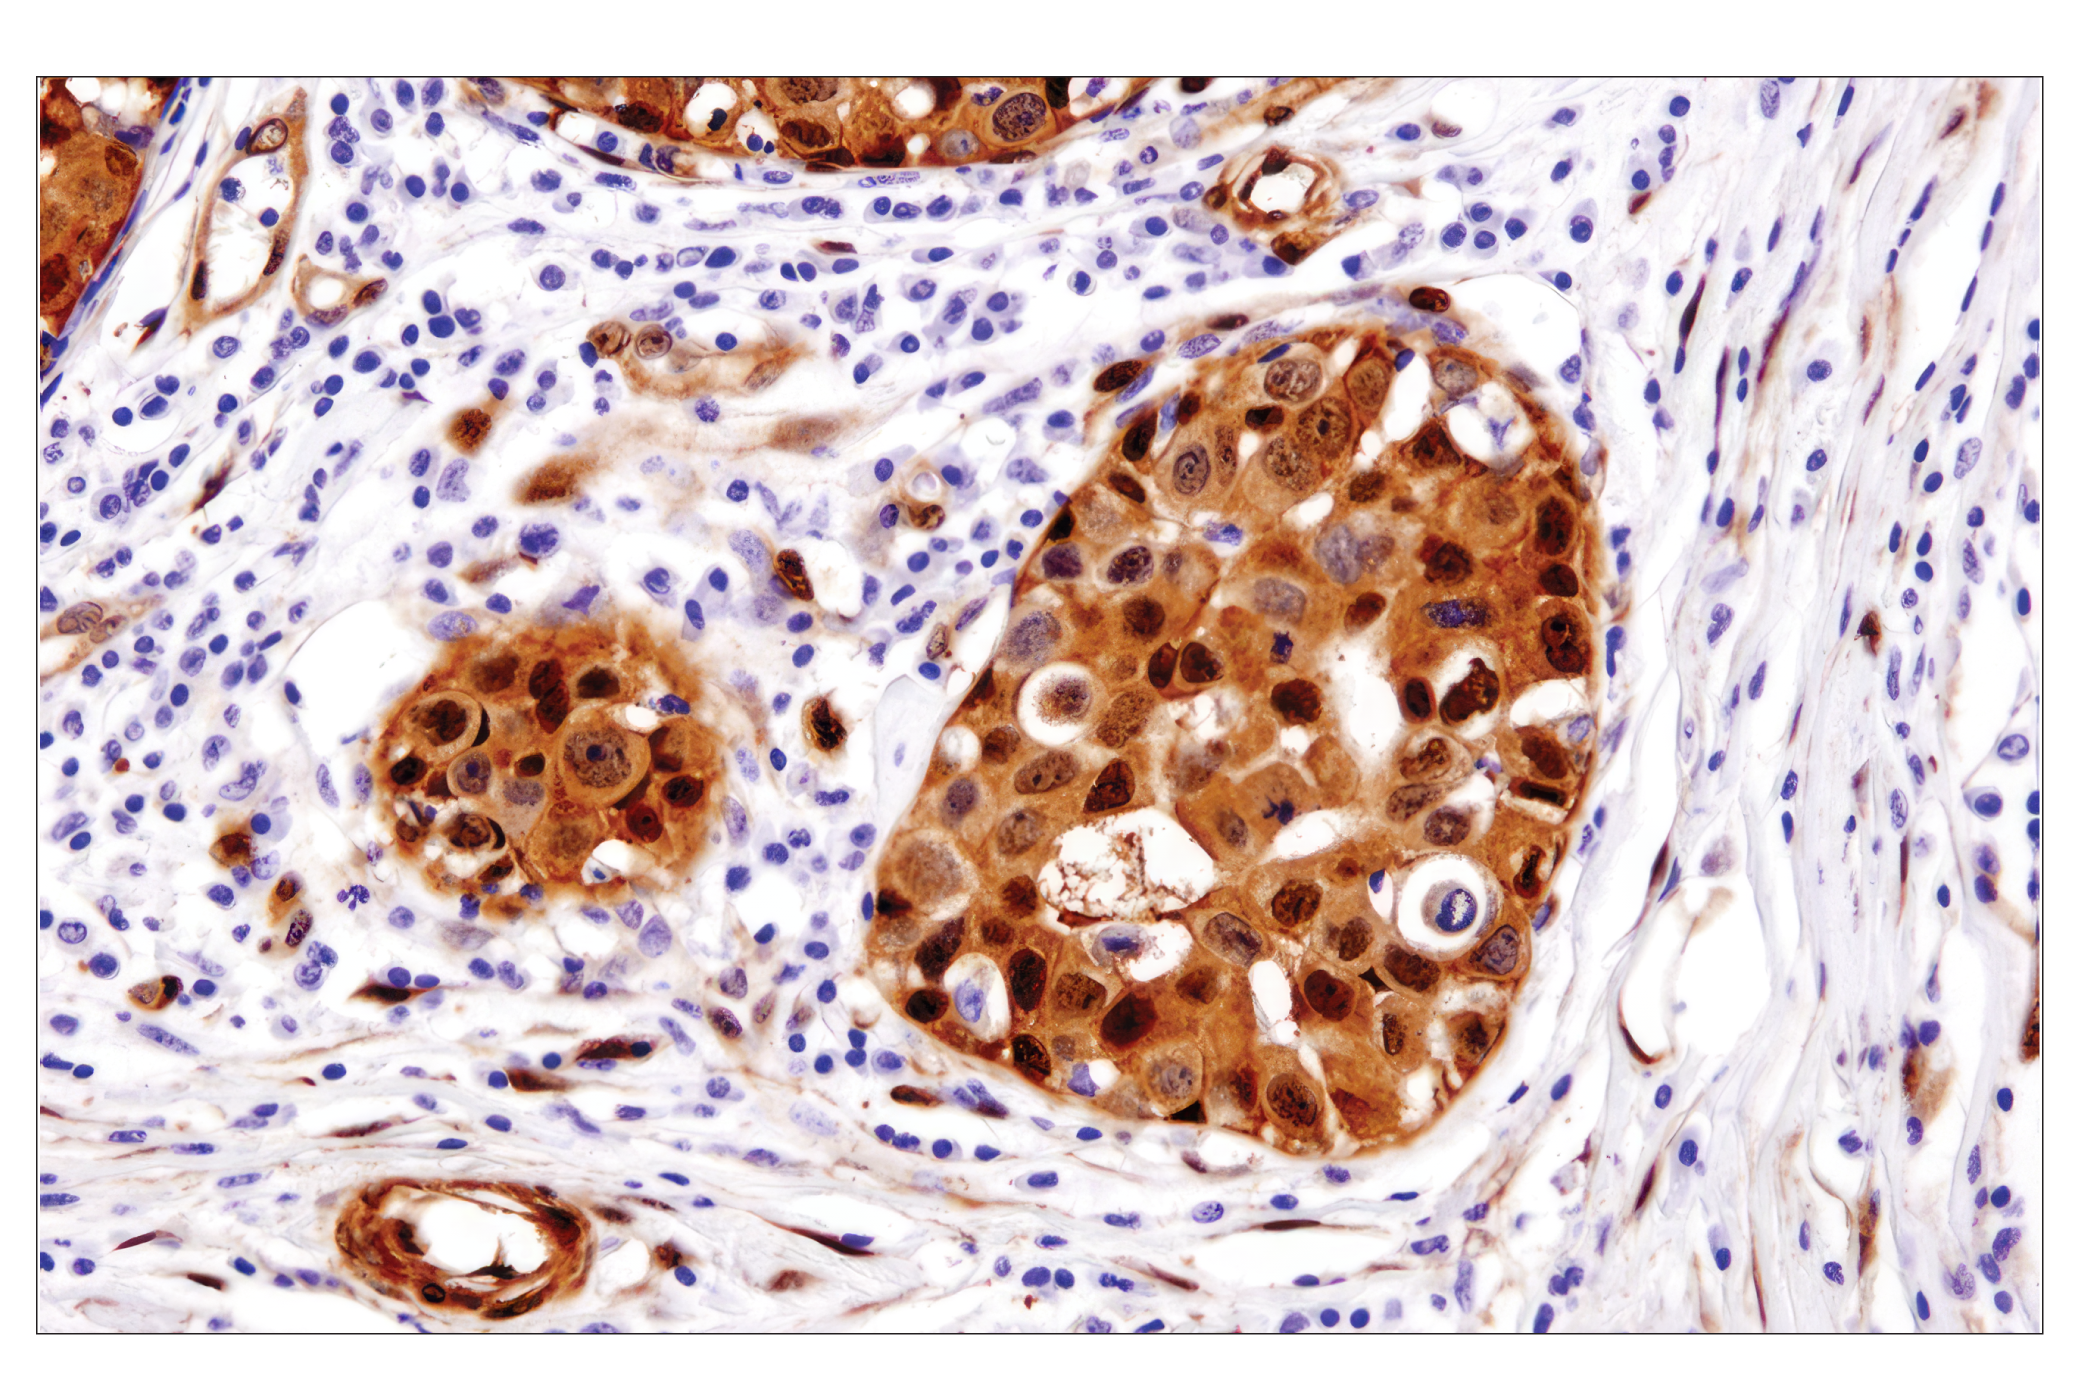  Image 54: Small Cell Lung Cancer Biomarker Antibody Sampler Kit